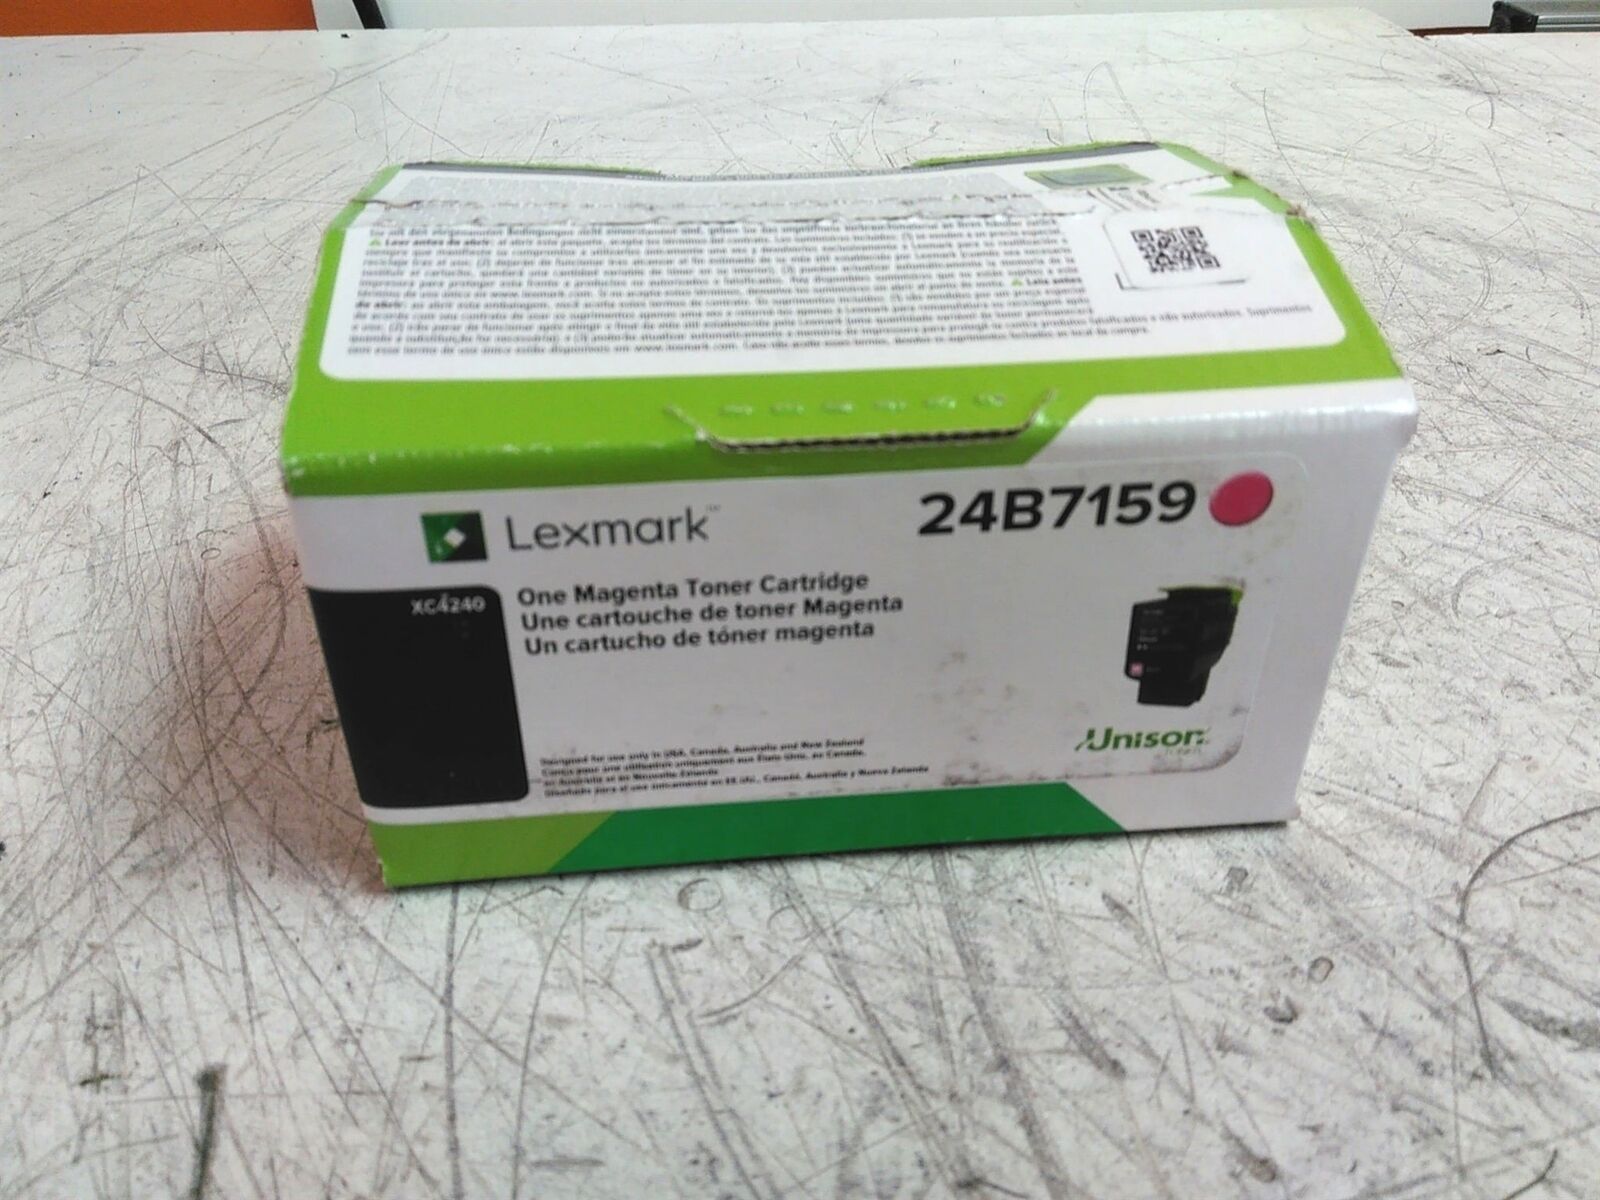 New Lexmark 24B7159 Magenta Toner Cartridge Damaged Box